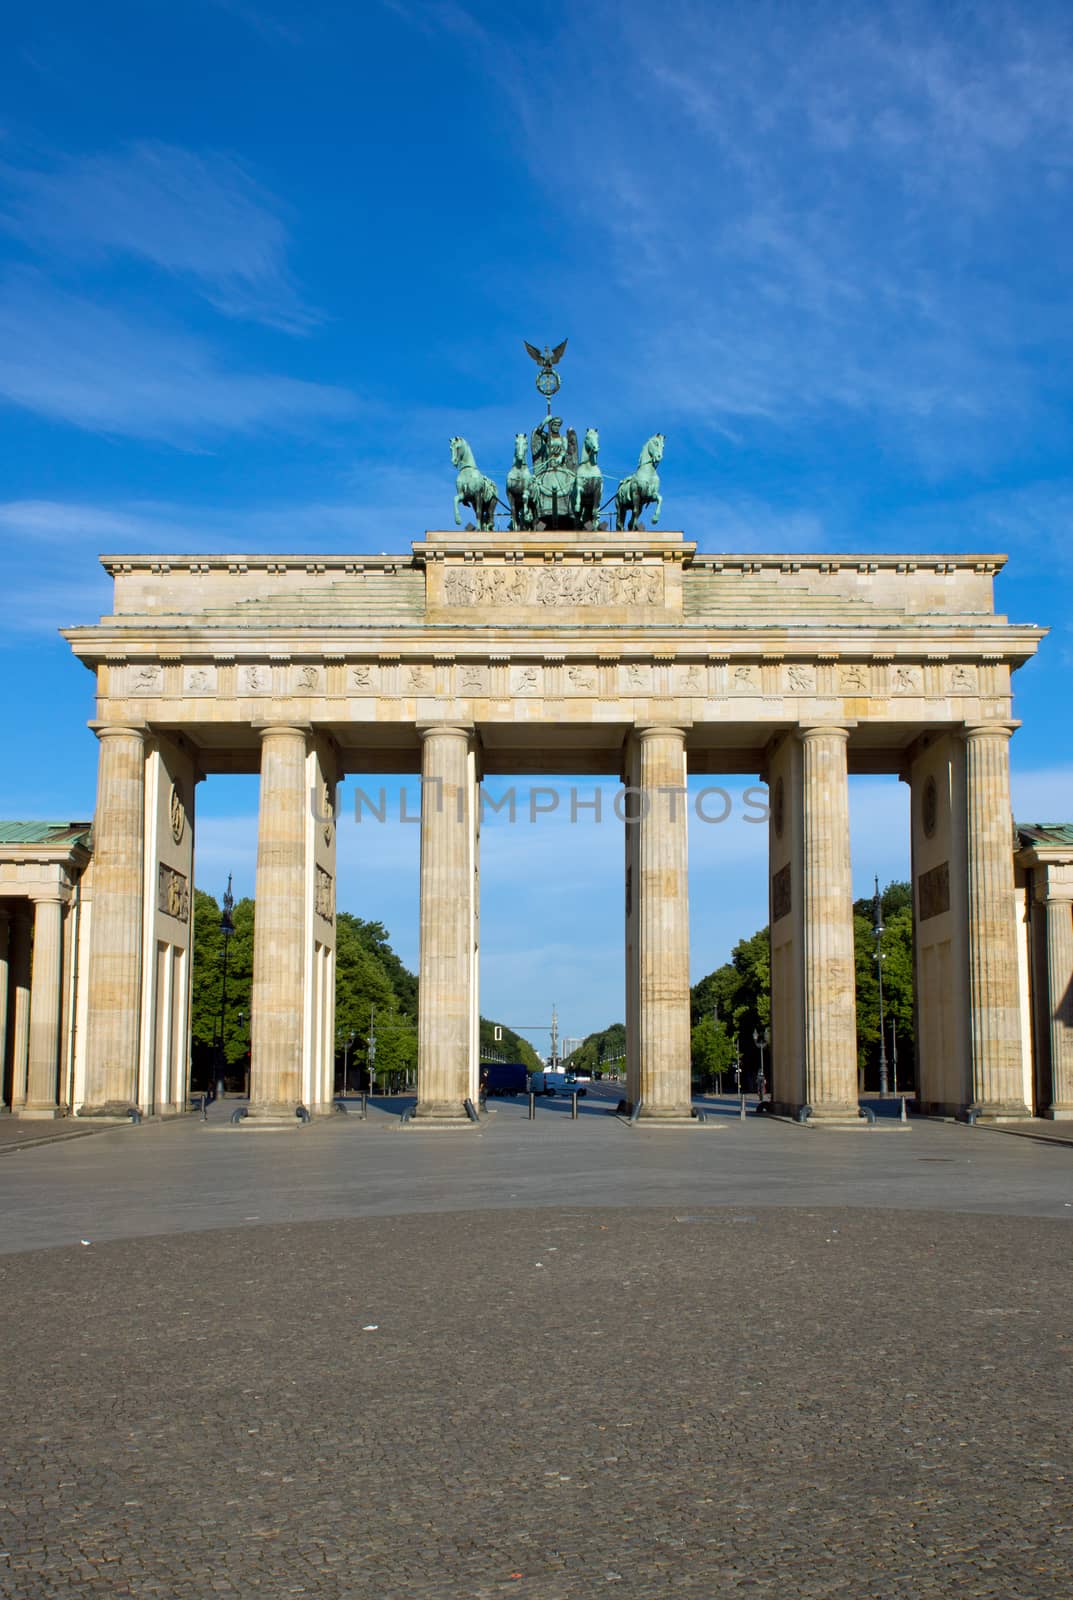 The famous Brandenburger Tor in the center of Berlin